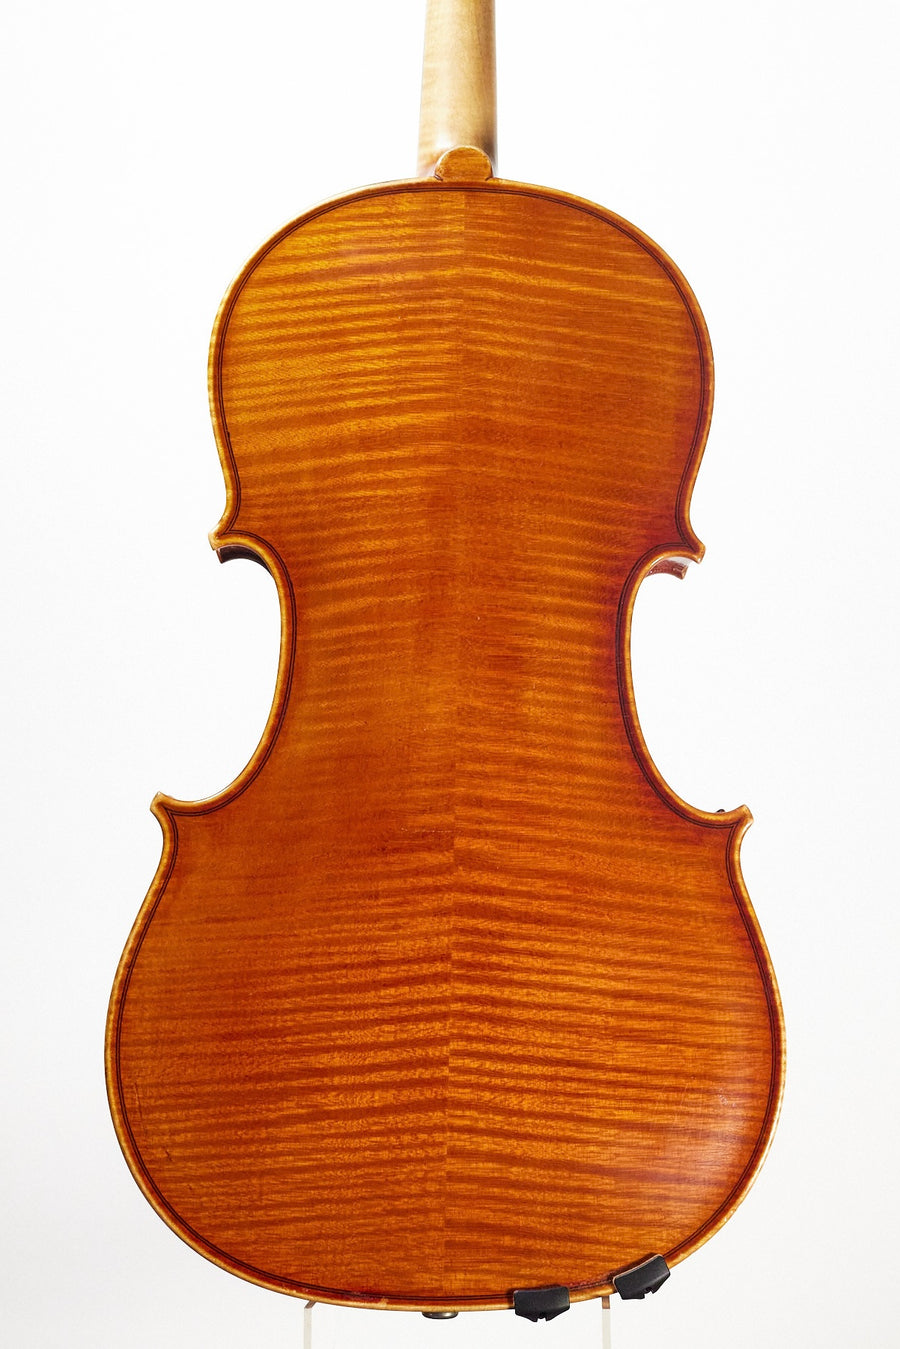 A Fine Italian Viola by Giuseppe Stefanini, 1975. 16 5/8”